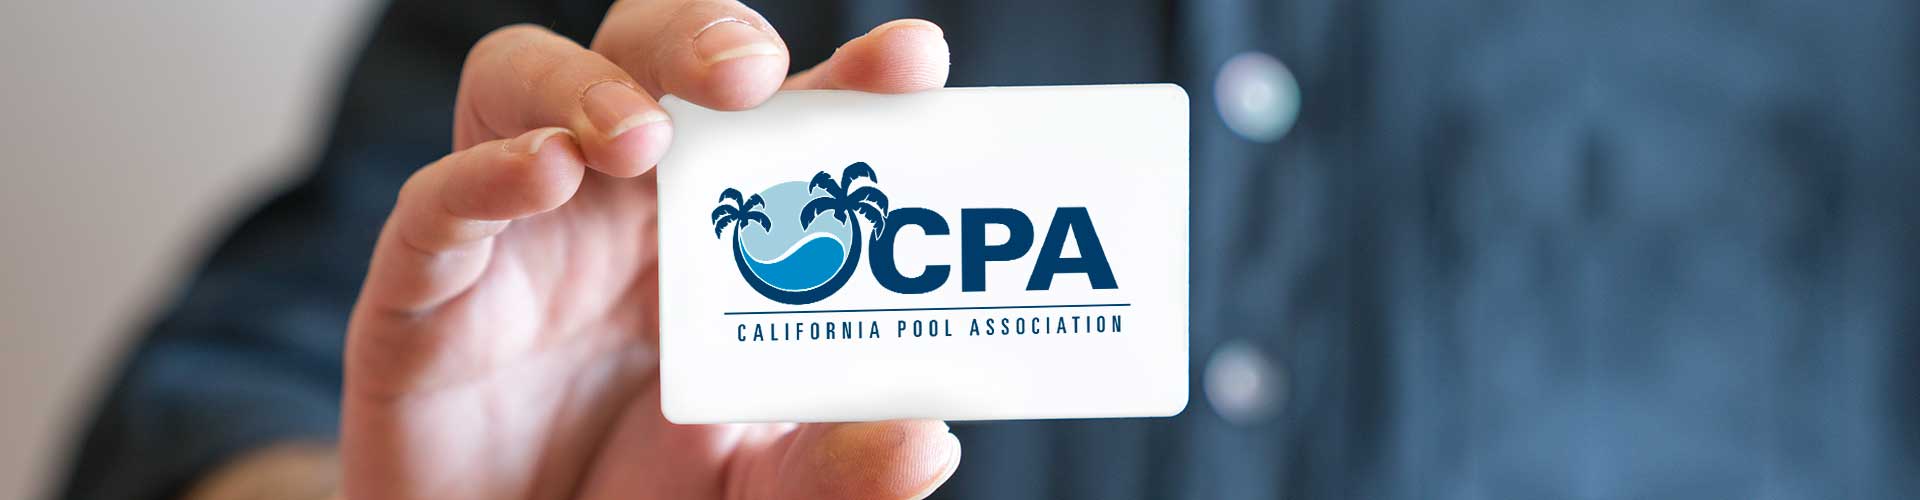 With a Grain of Salt - CPA - California Pool Association